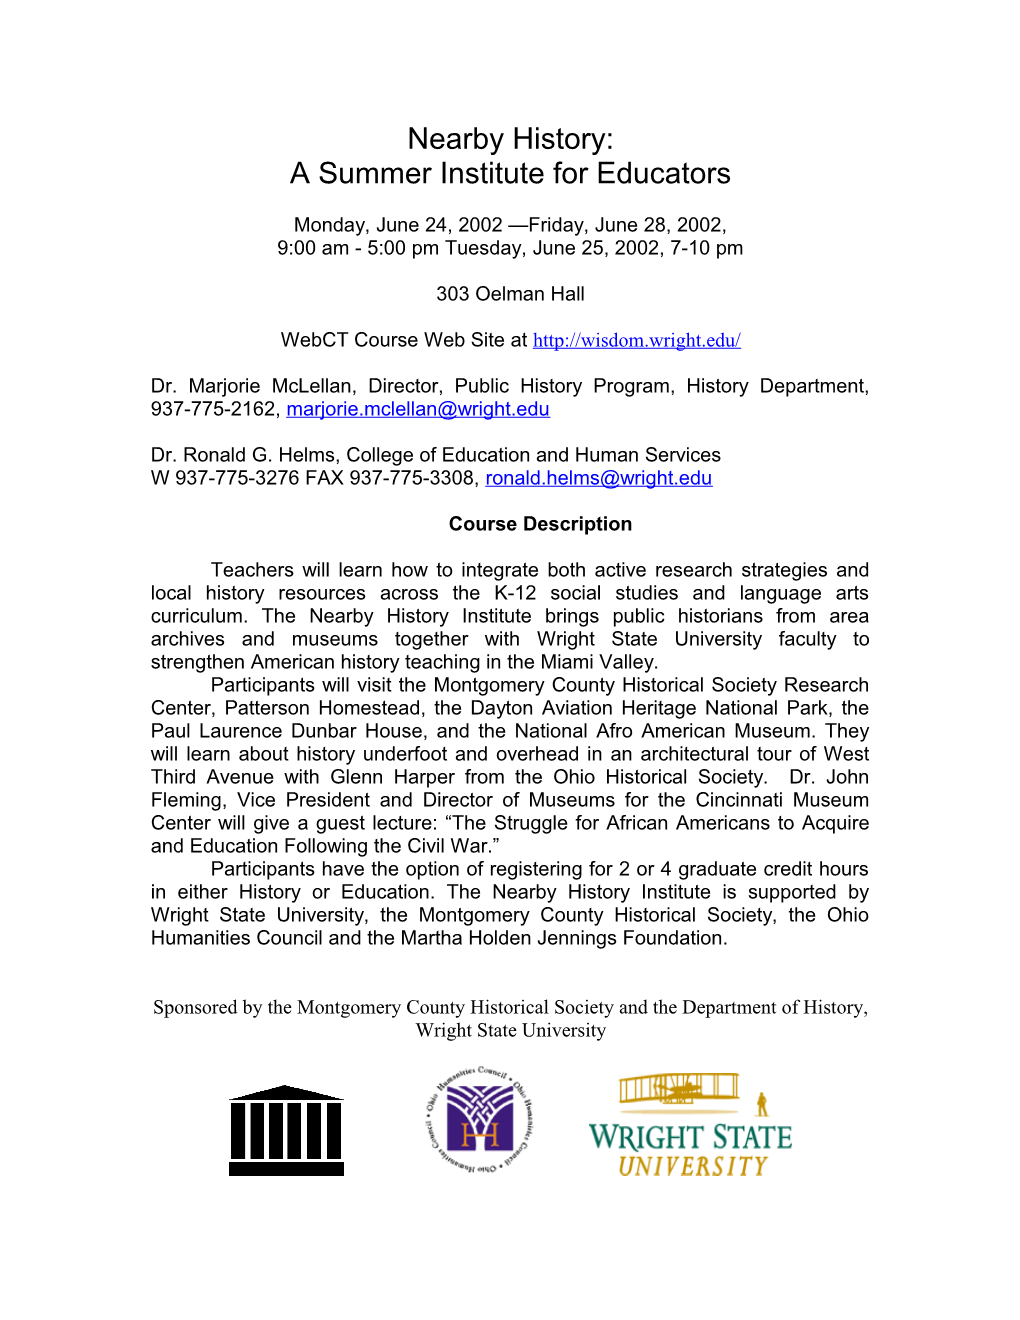 A Summer Institute for Educators